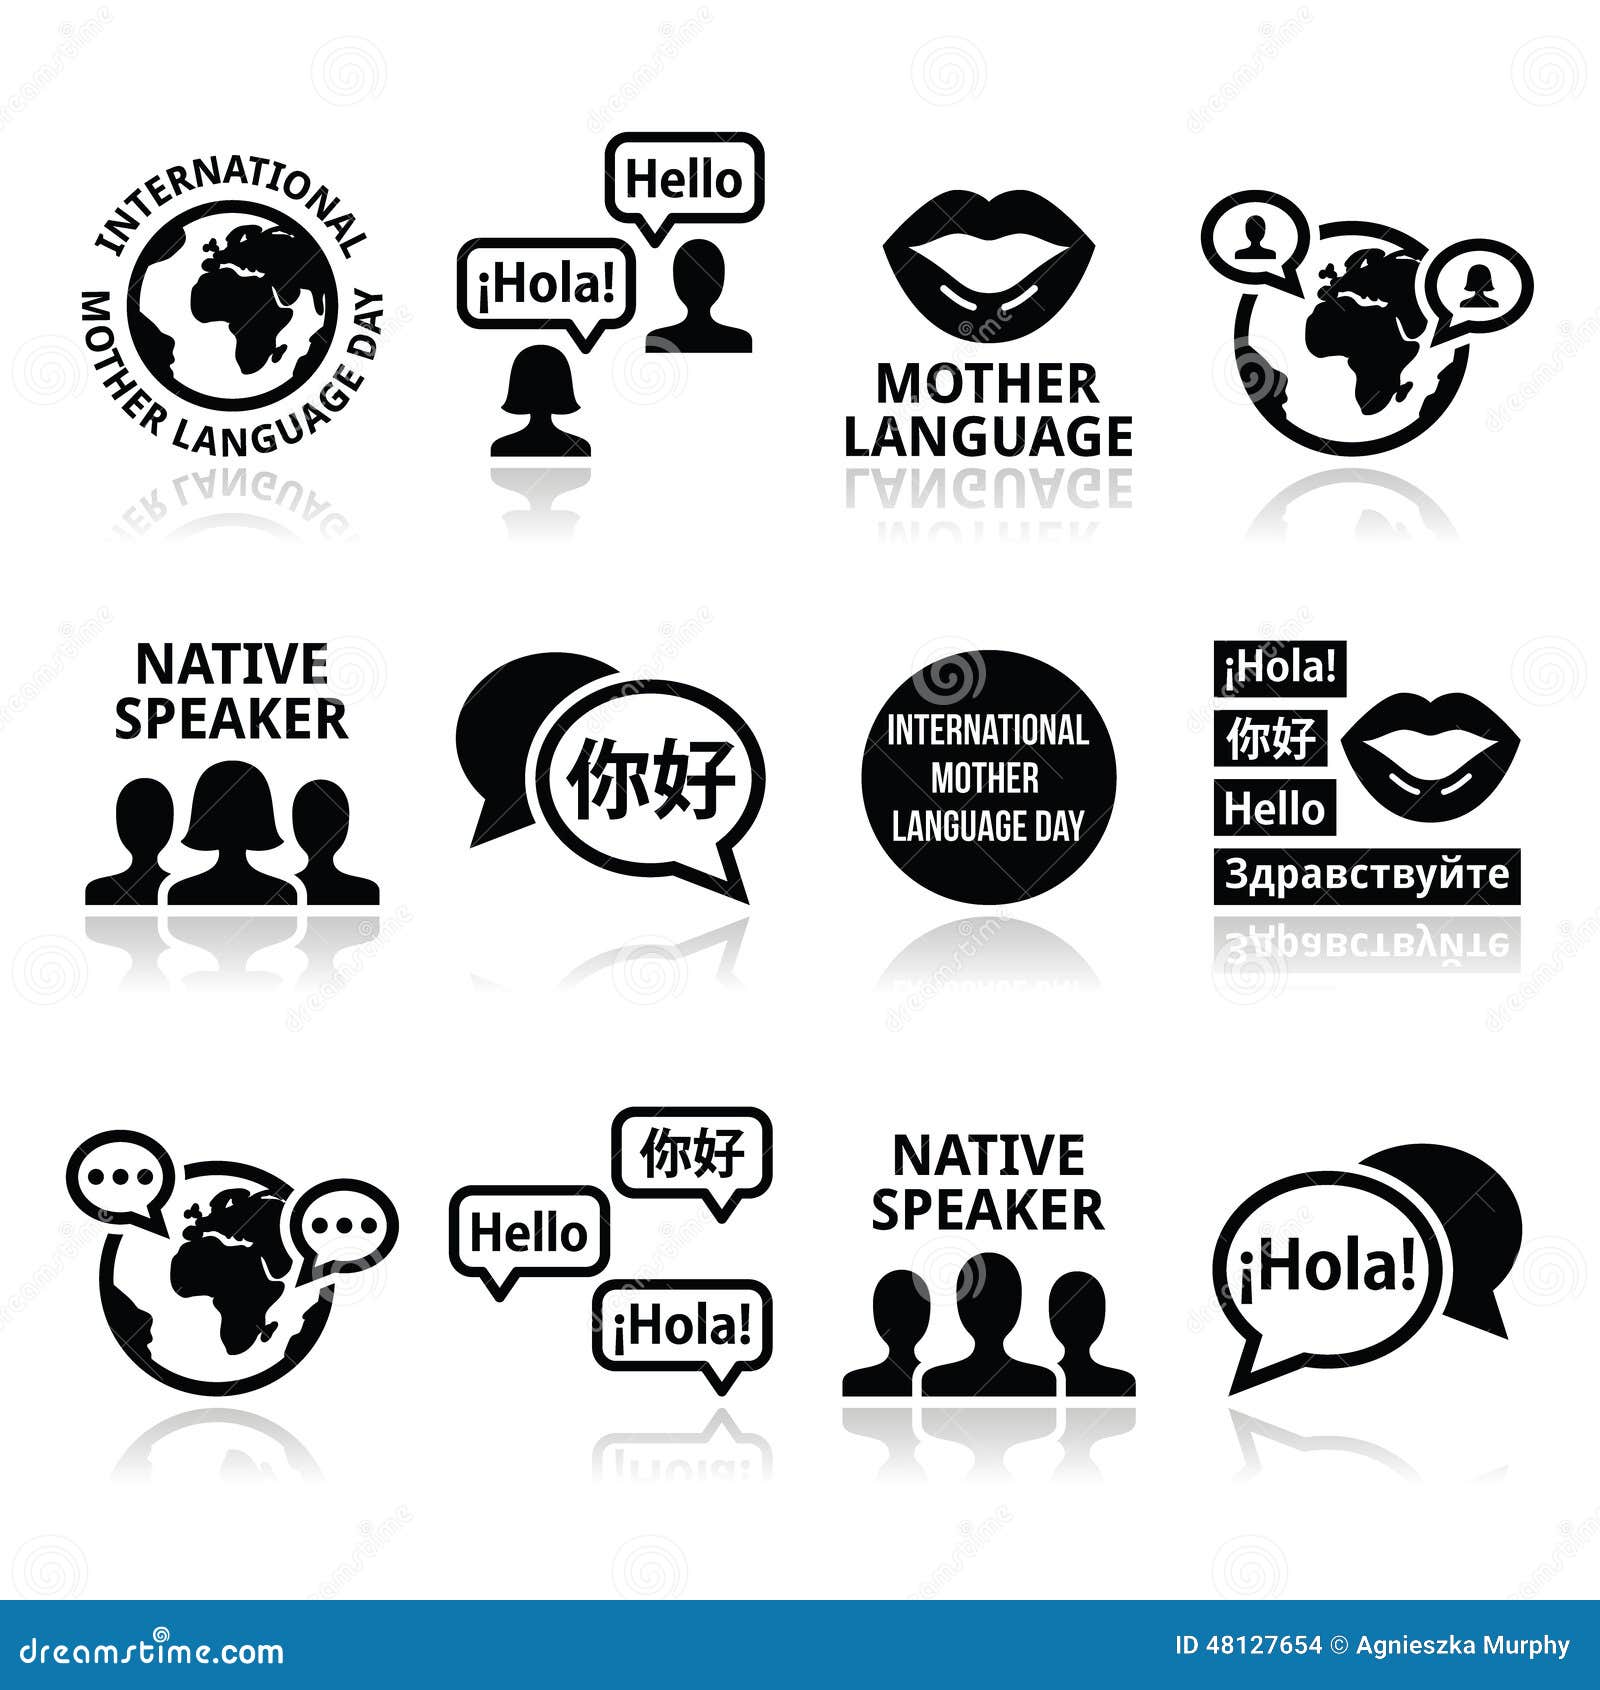 international mother language day icons set